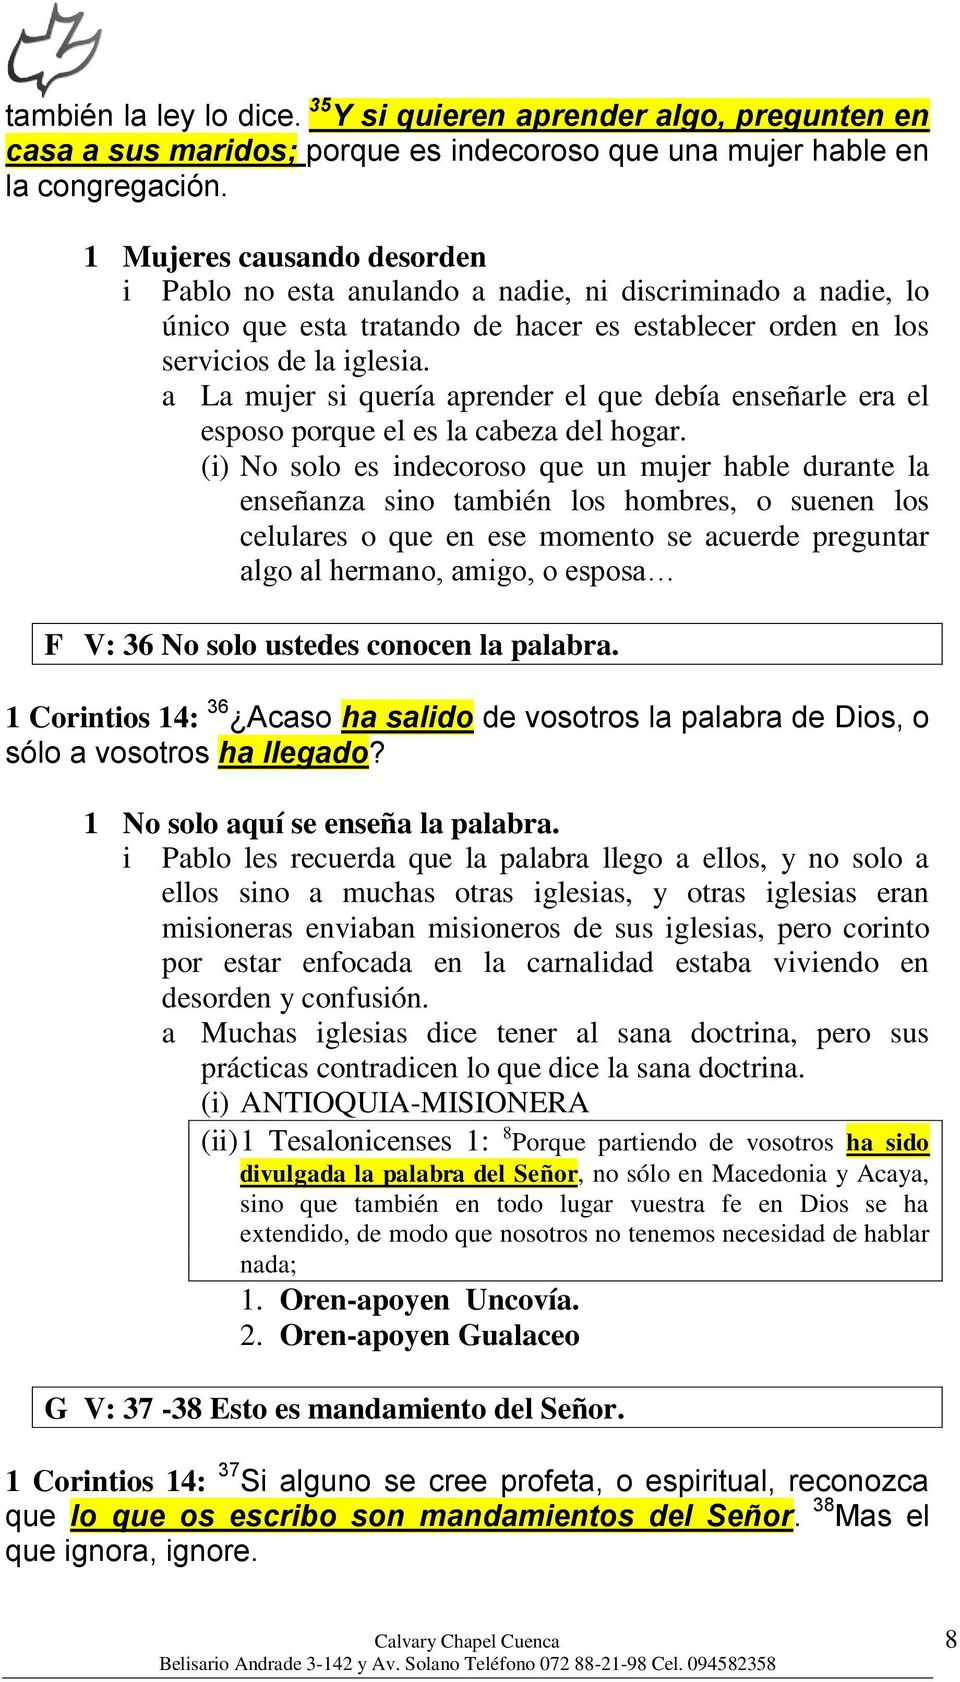 1 CORINTIOS 14 ORDEN EN LA IGLESIA - PDF Free Download